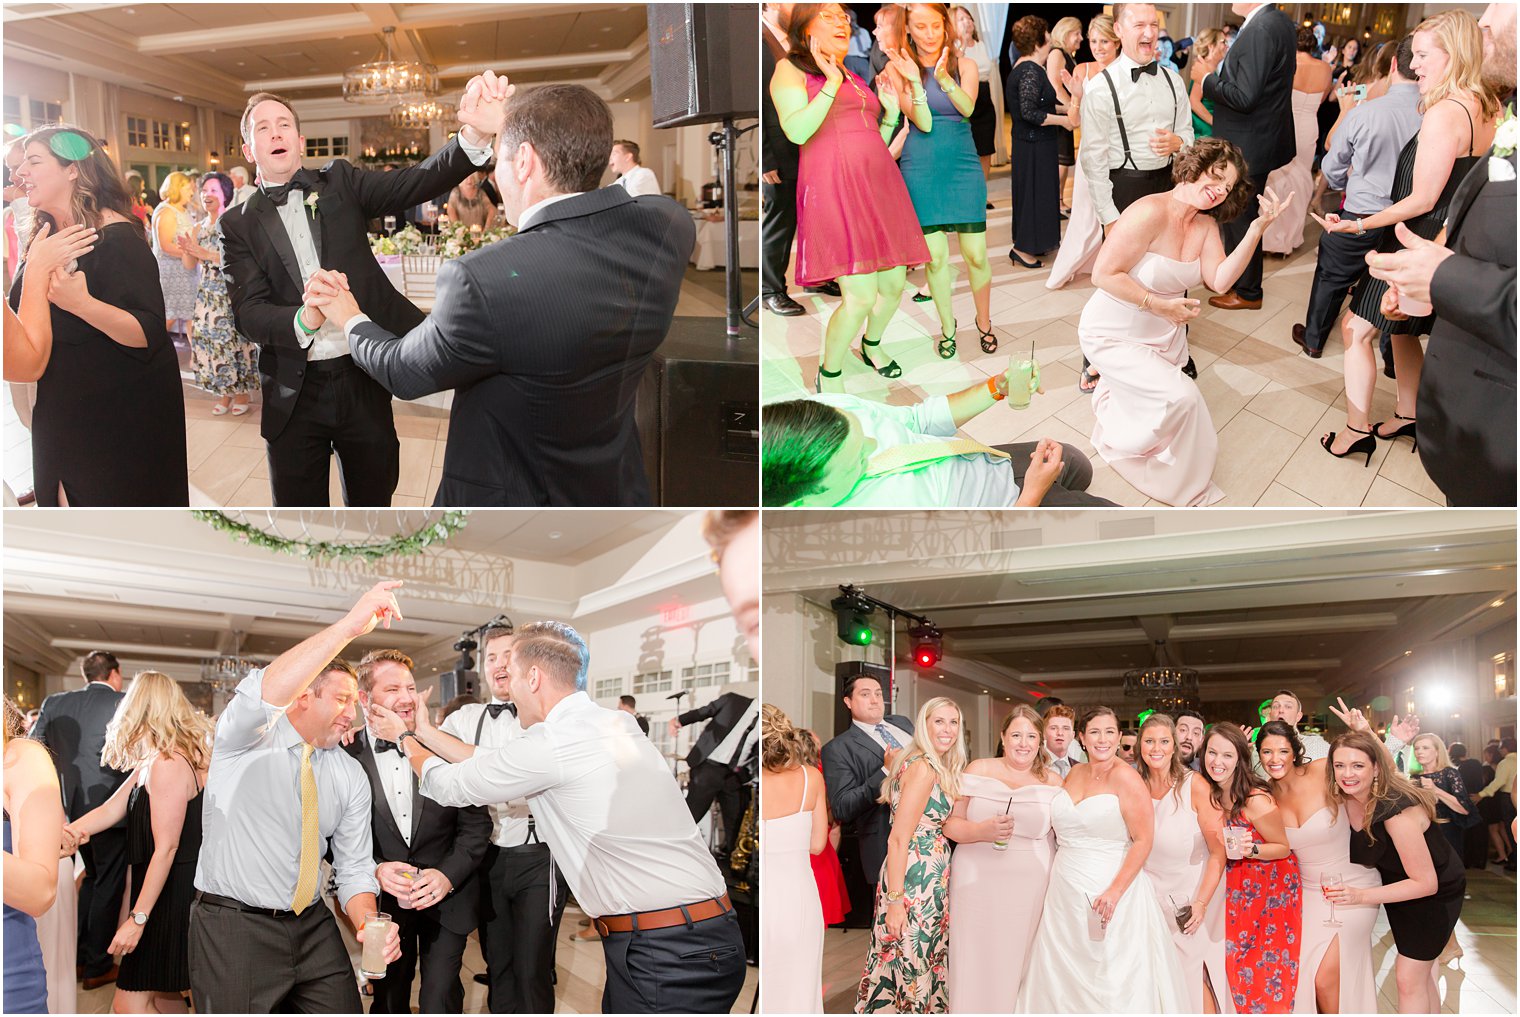 Guests dancing at wedding reception at Indian Trail Club 